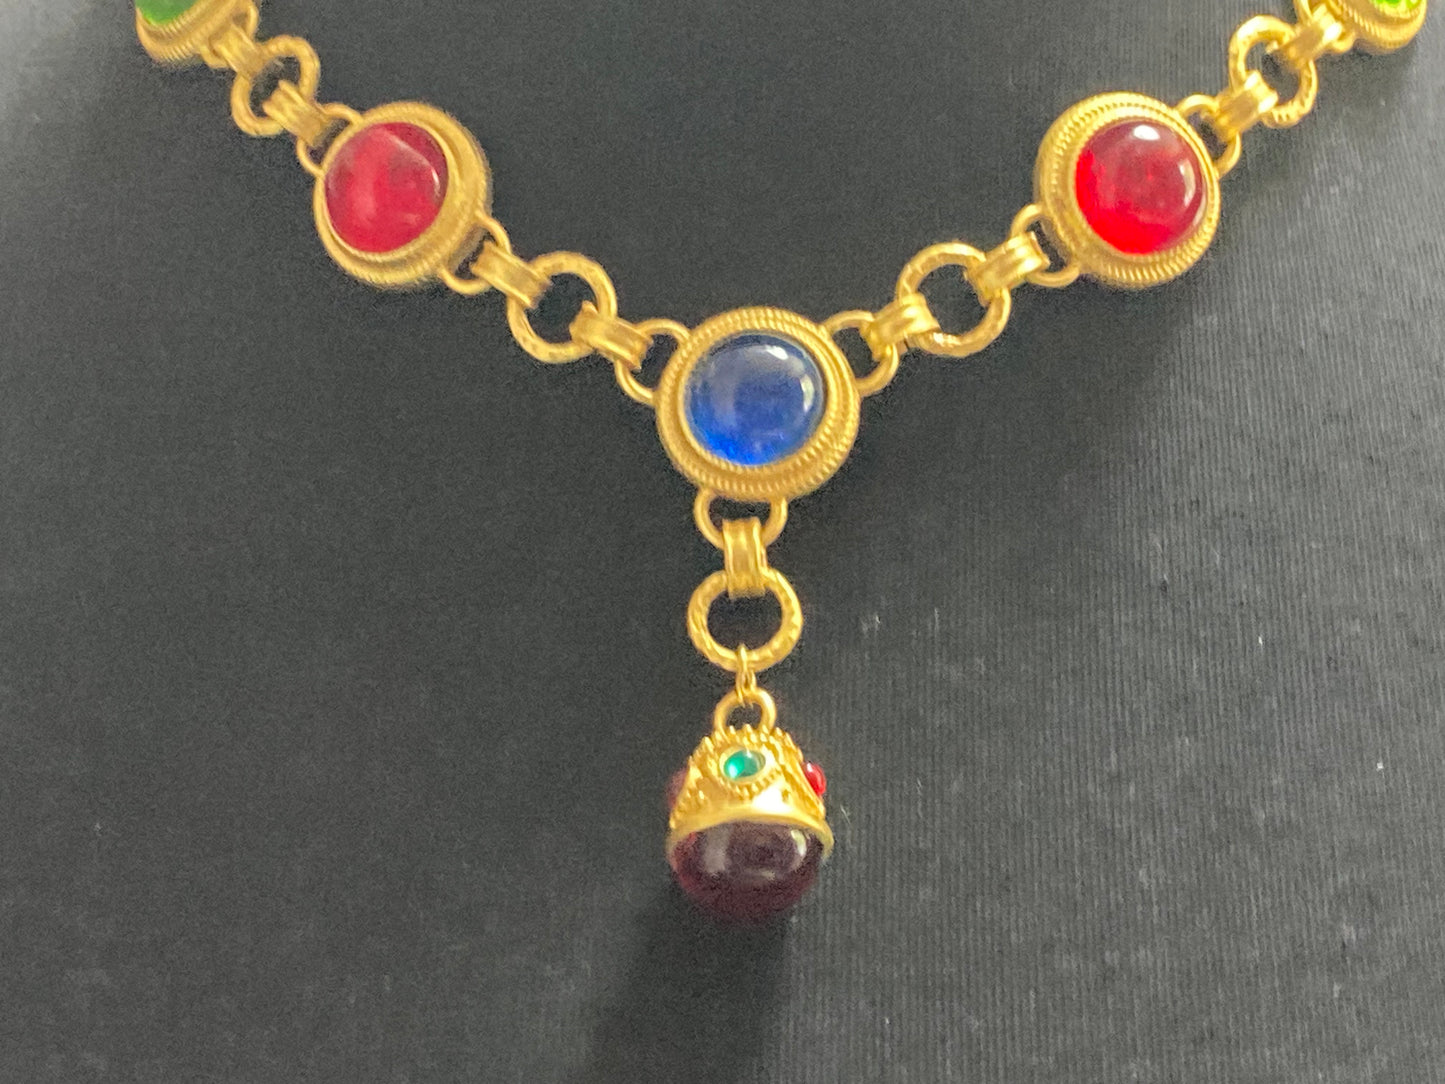 Etruscan glass cabochon gripoix style necklace